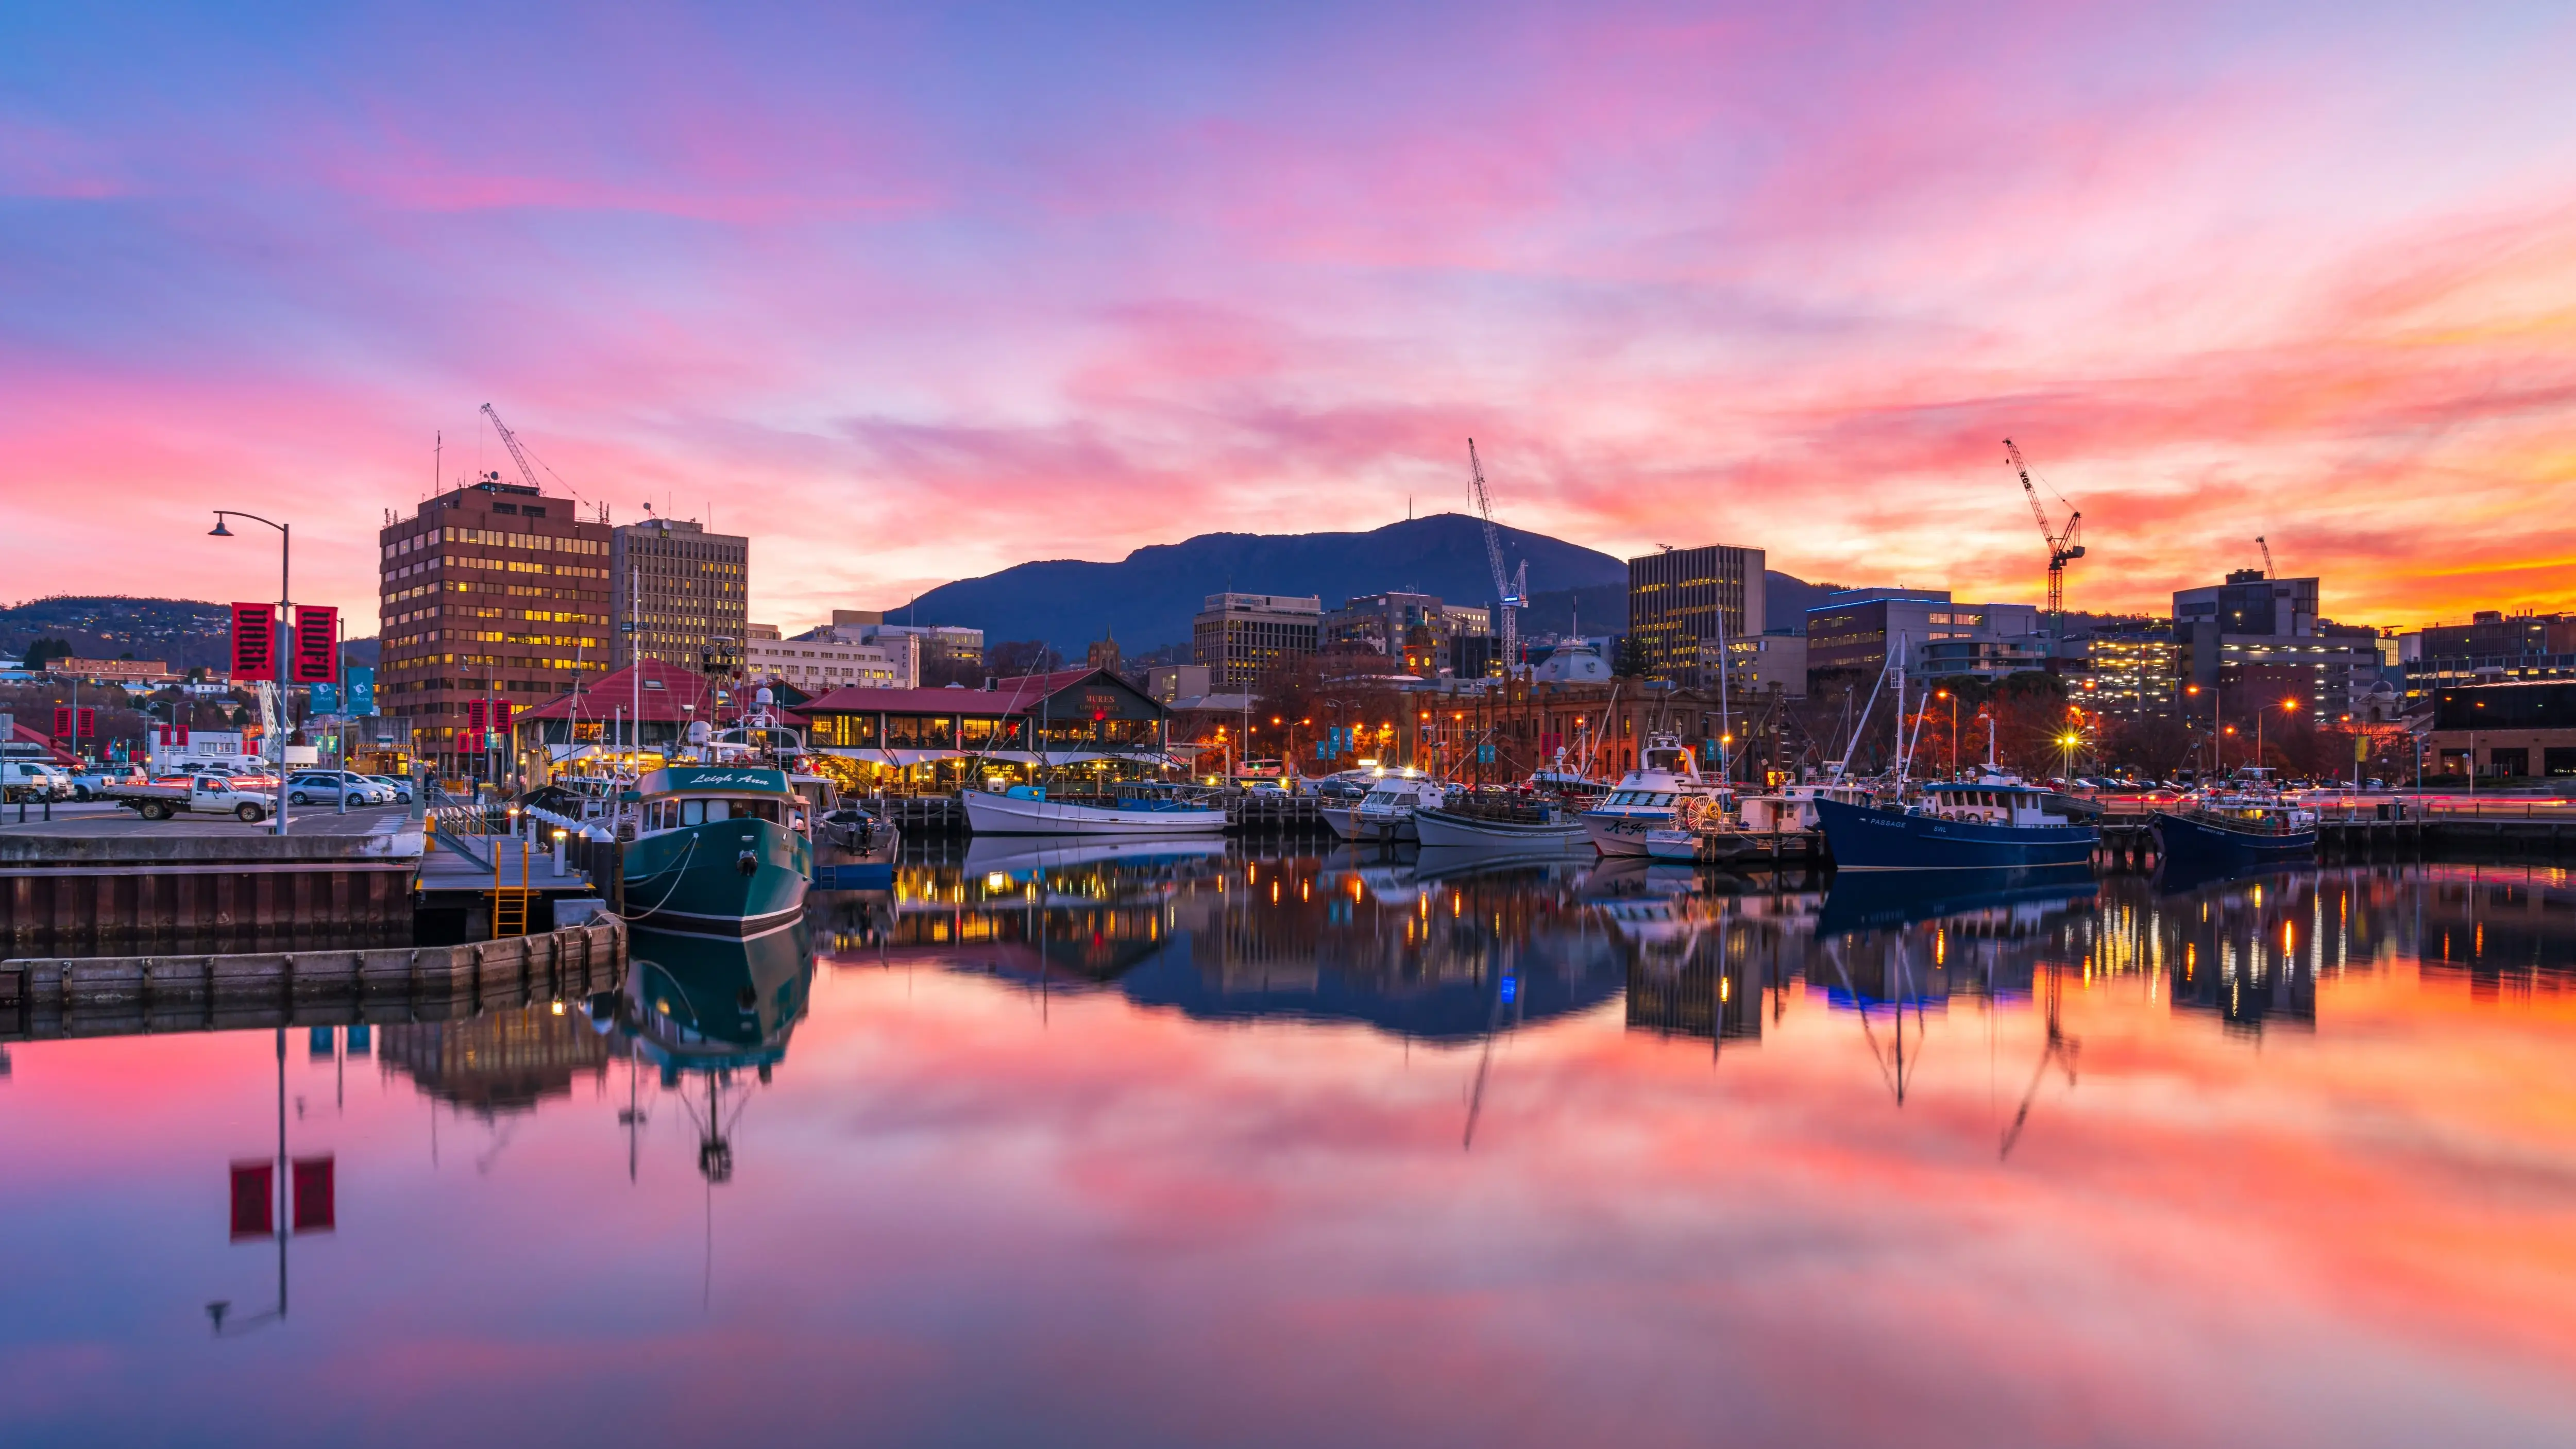 Hobart waterfront at sunset with city skyline and fishing boats. Image credit: Tourism Tasmania/Luke Tscharke